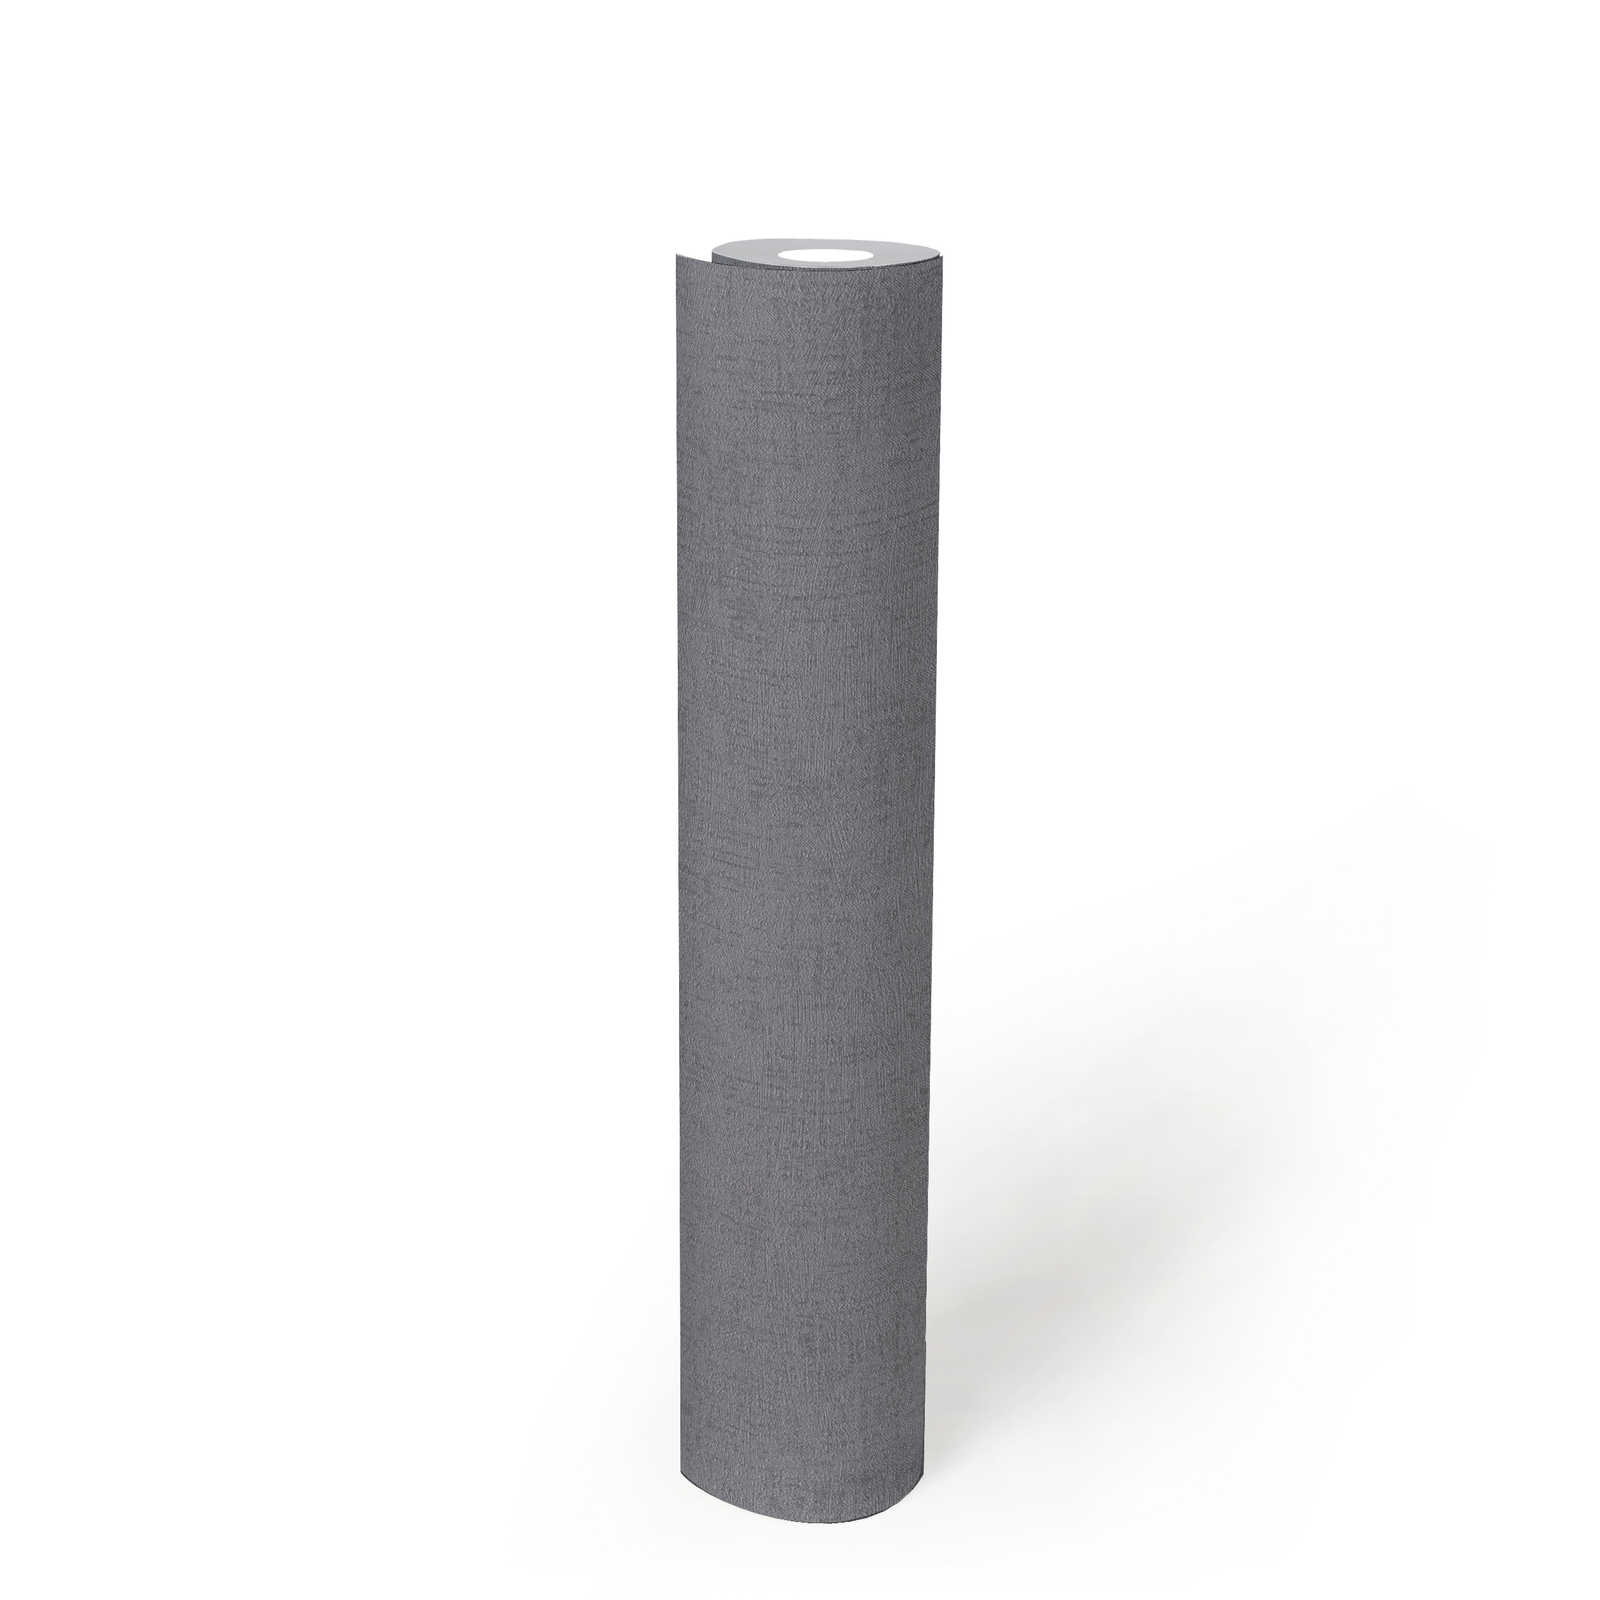             Plain wallpaper steel grey with structure design & gloss effect - grey, metallic
        